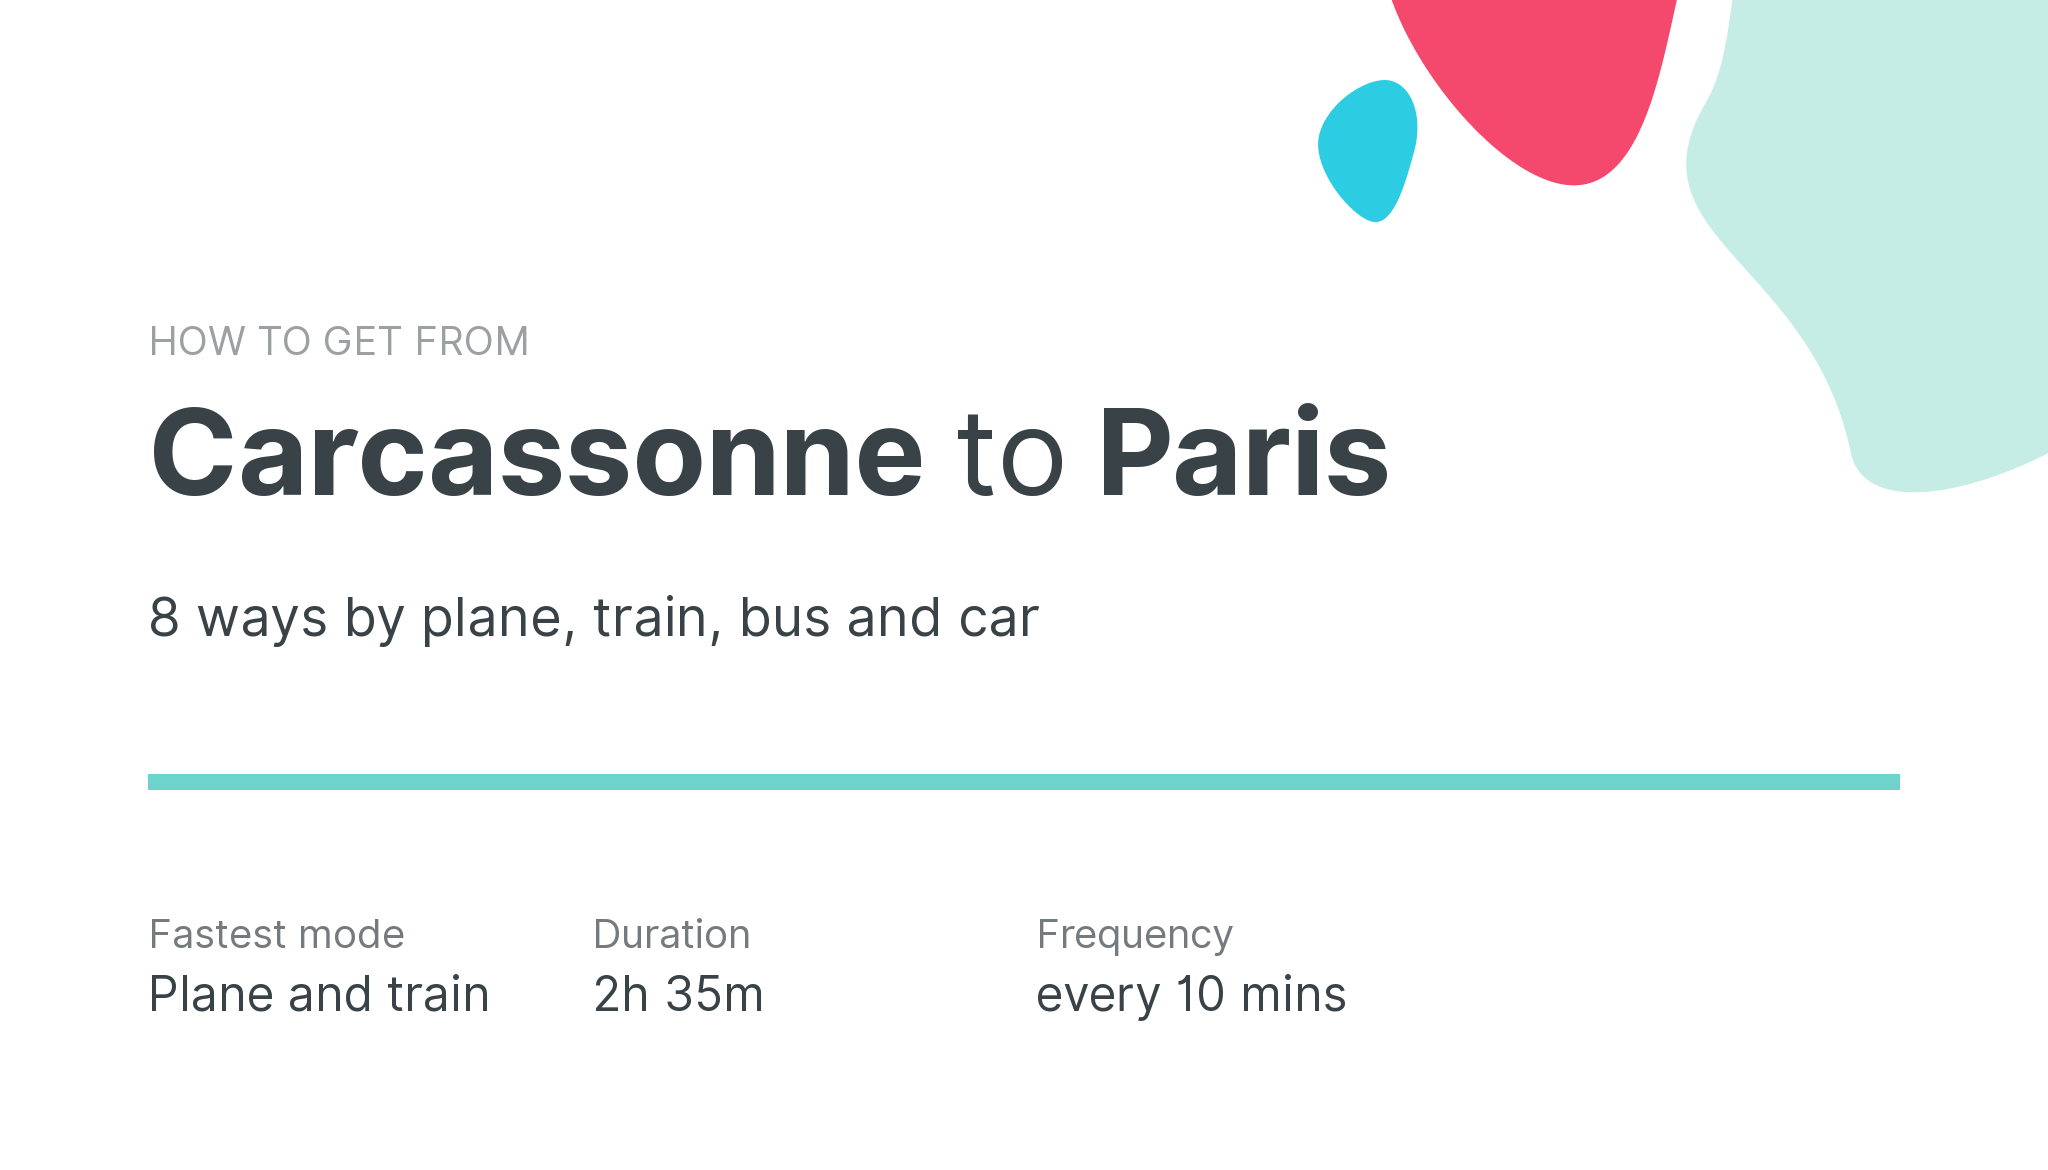 How do I get from Carcassonne to Paris